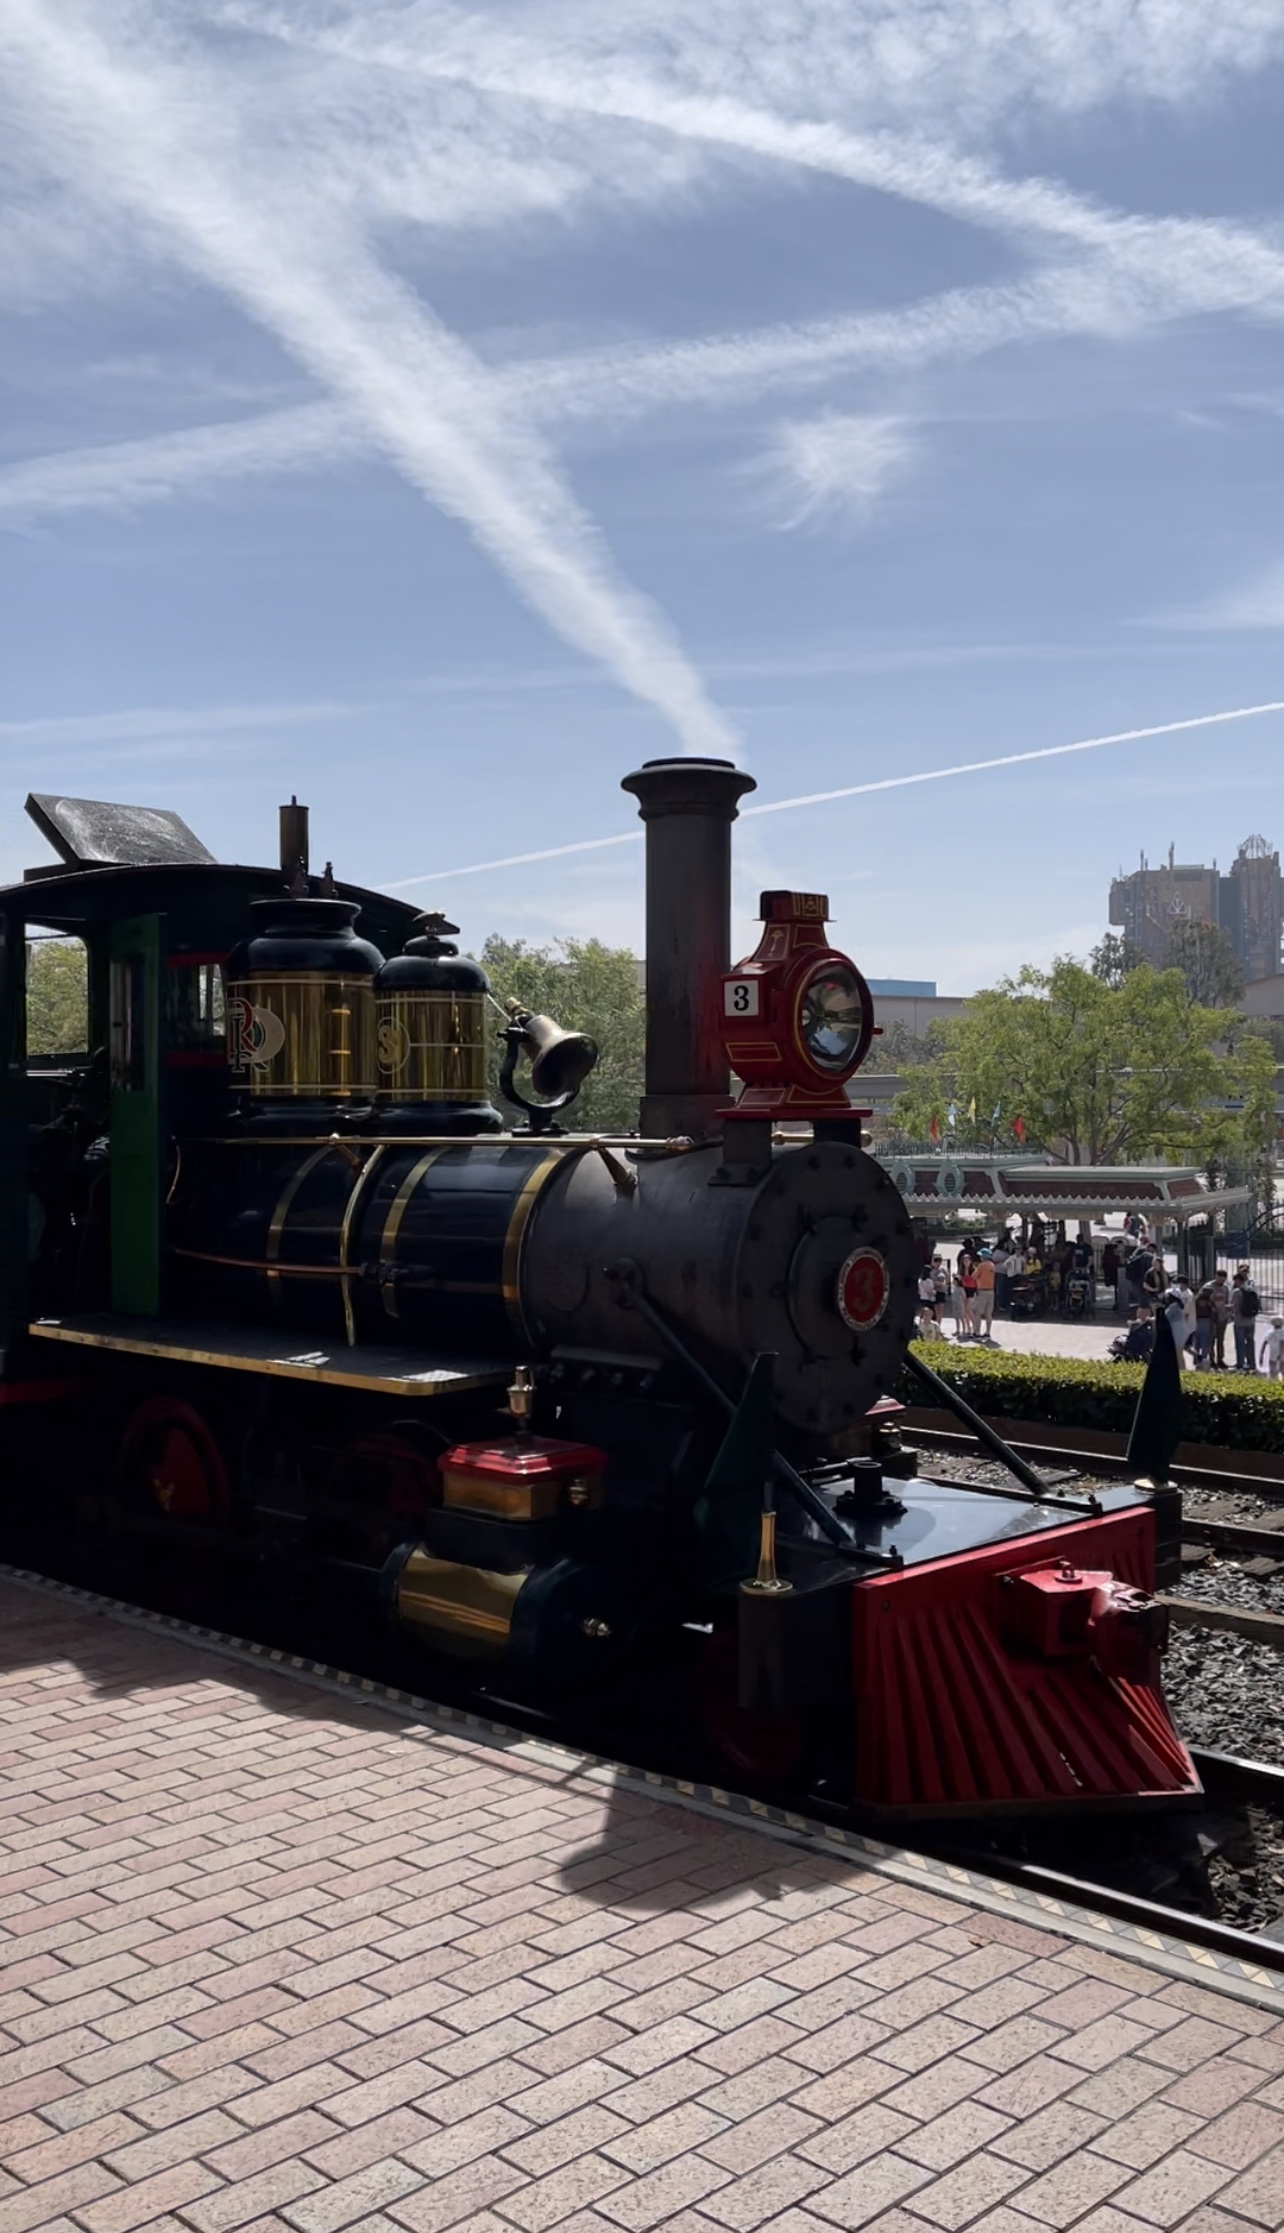 Disneyland Railroad: Full Ride POV in 4K post thumbnail image